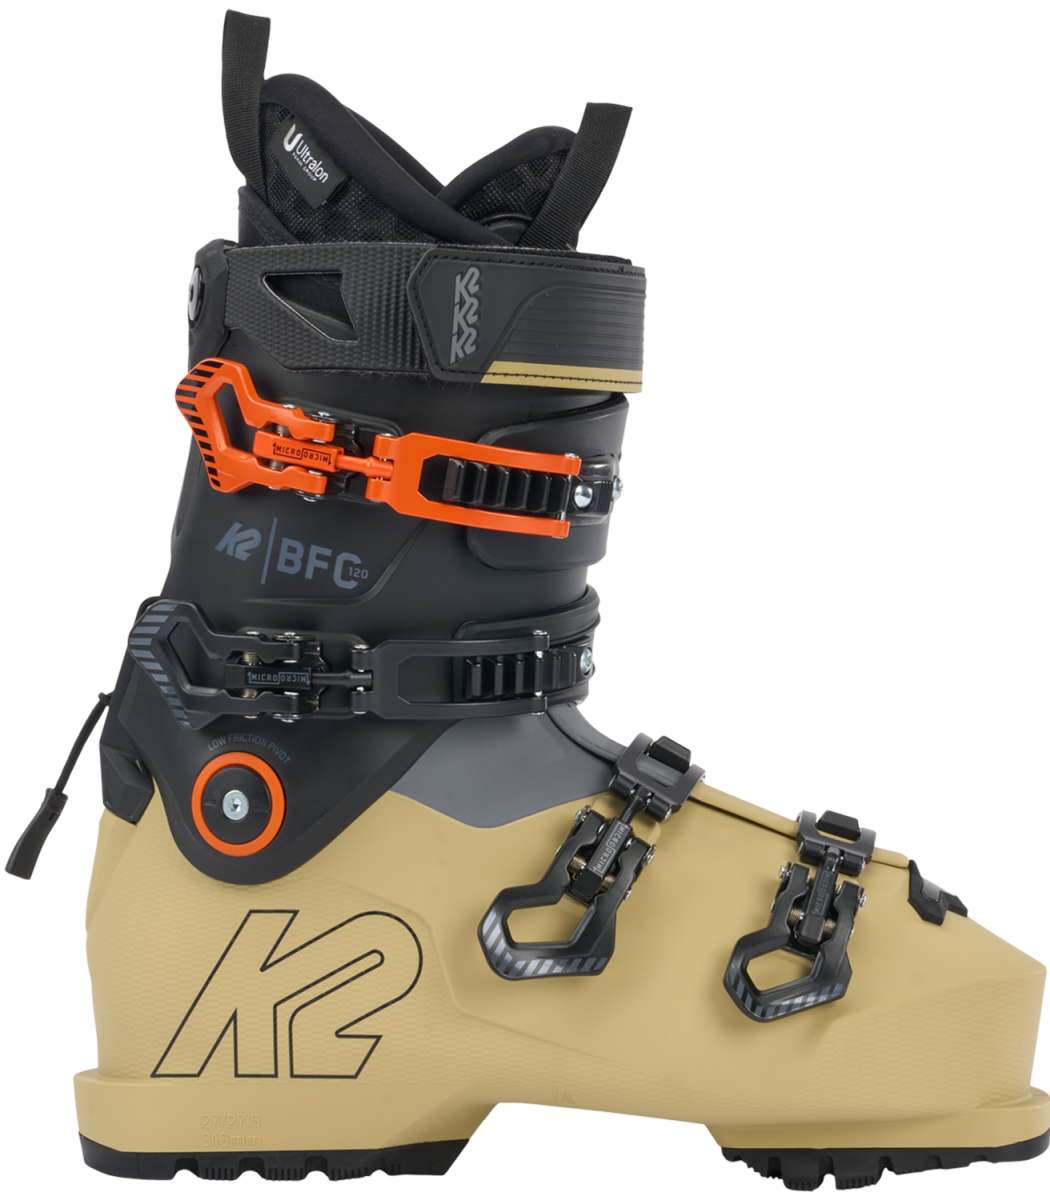 K2 MINDBENDER 120 SKI BOOTS - Ski Review